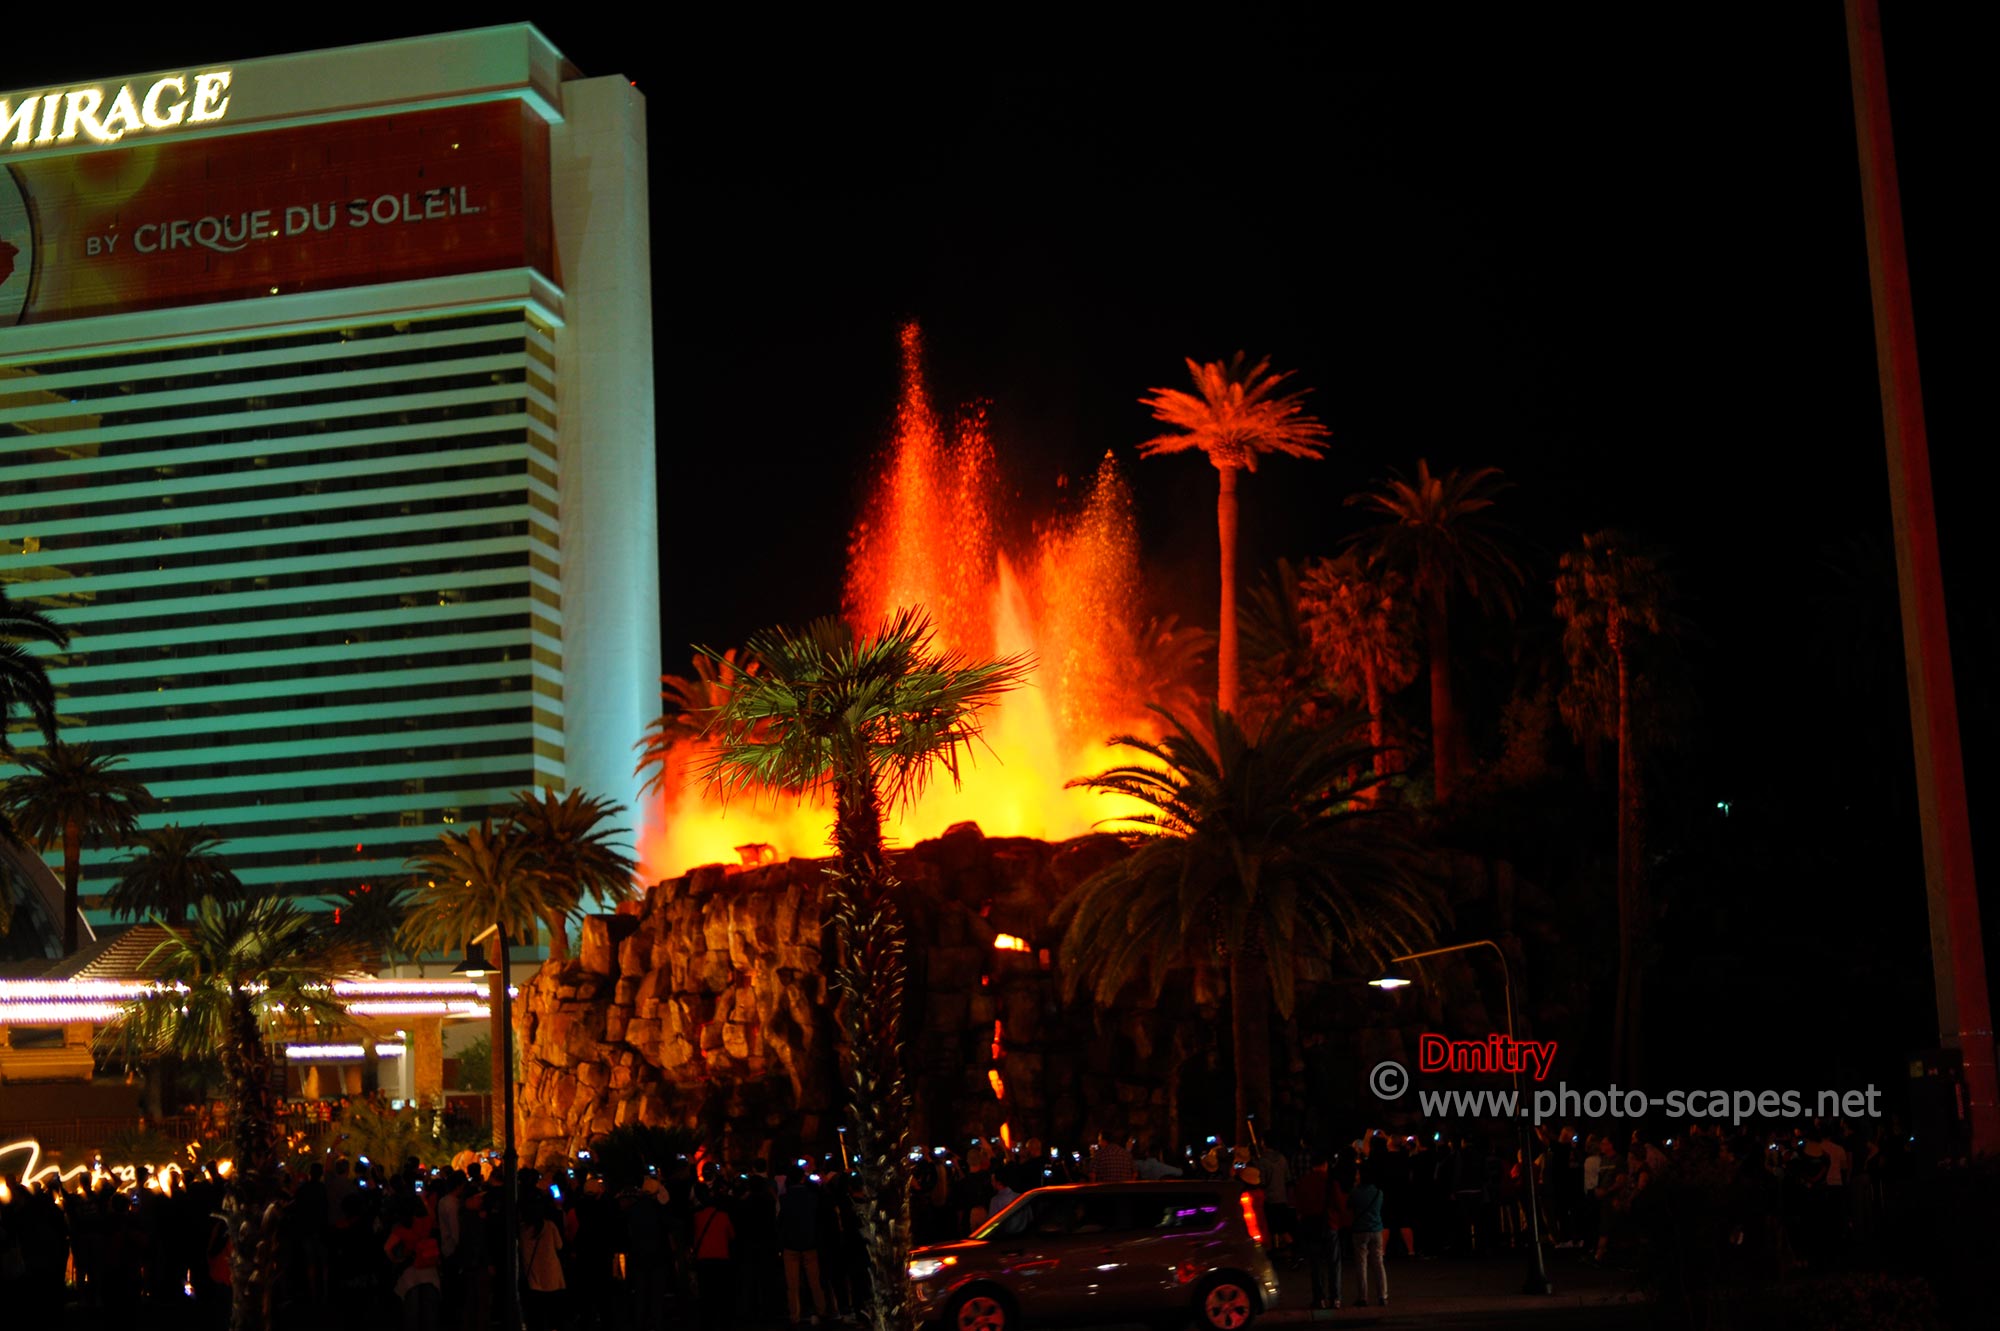 The Mirage, Las Vegas Hotel & Casino